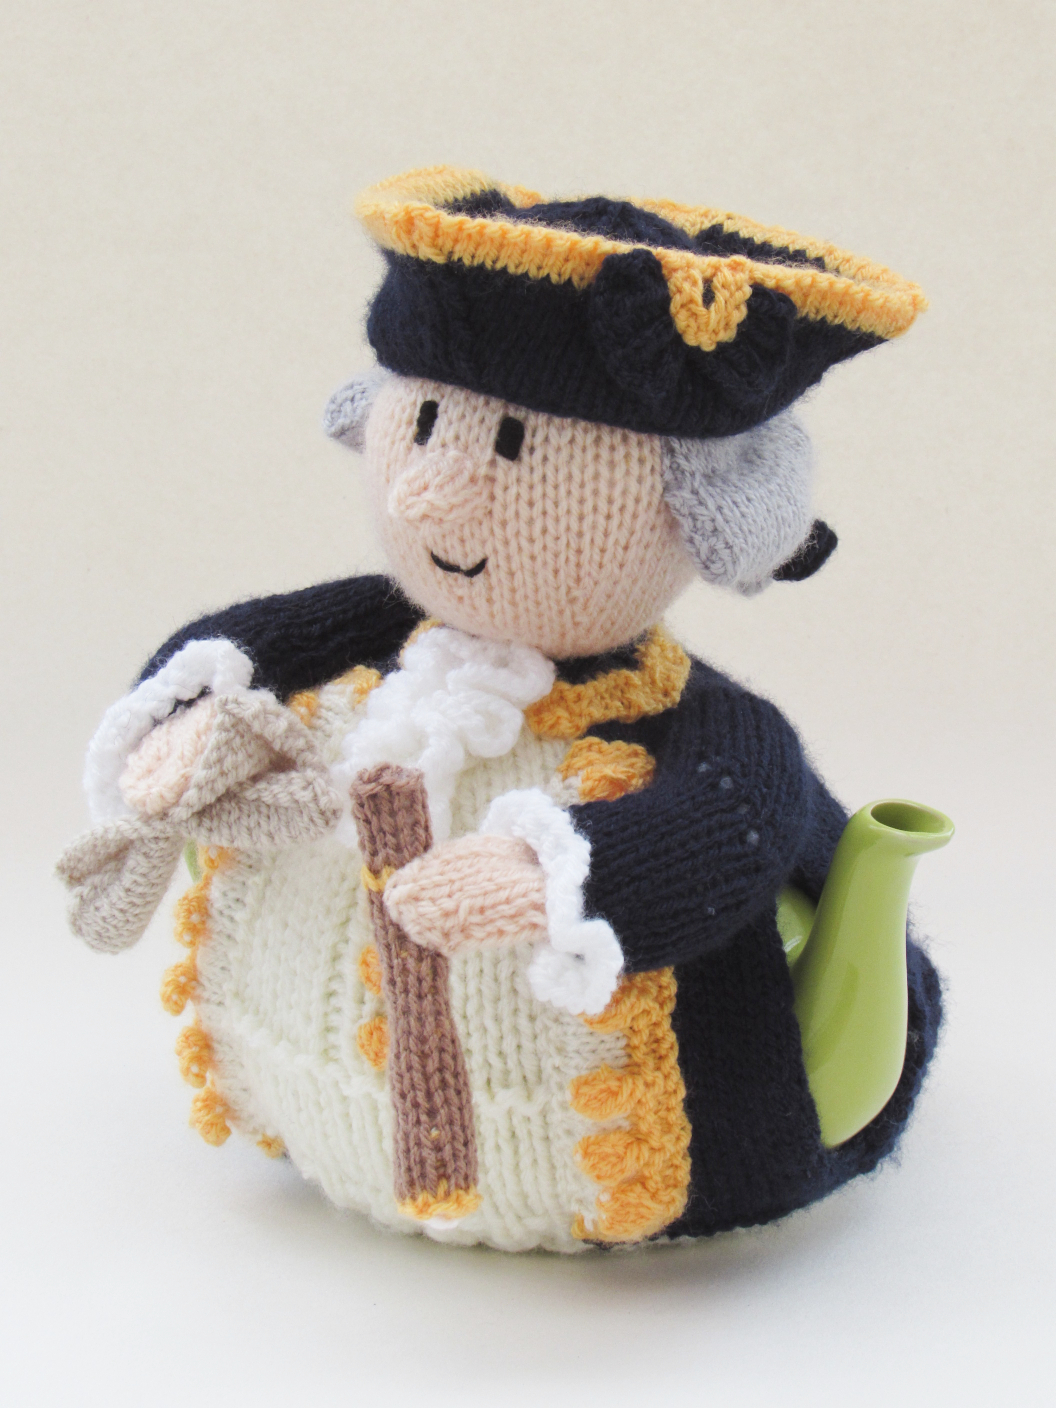 Captain James Cook knitting pattern